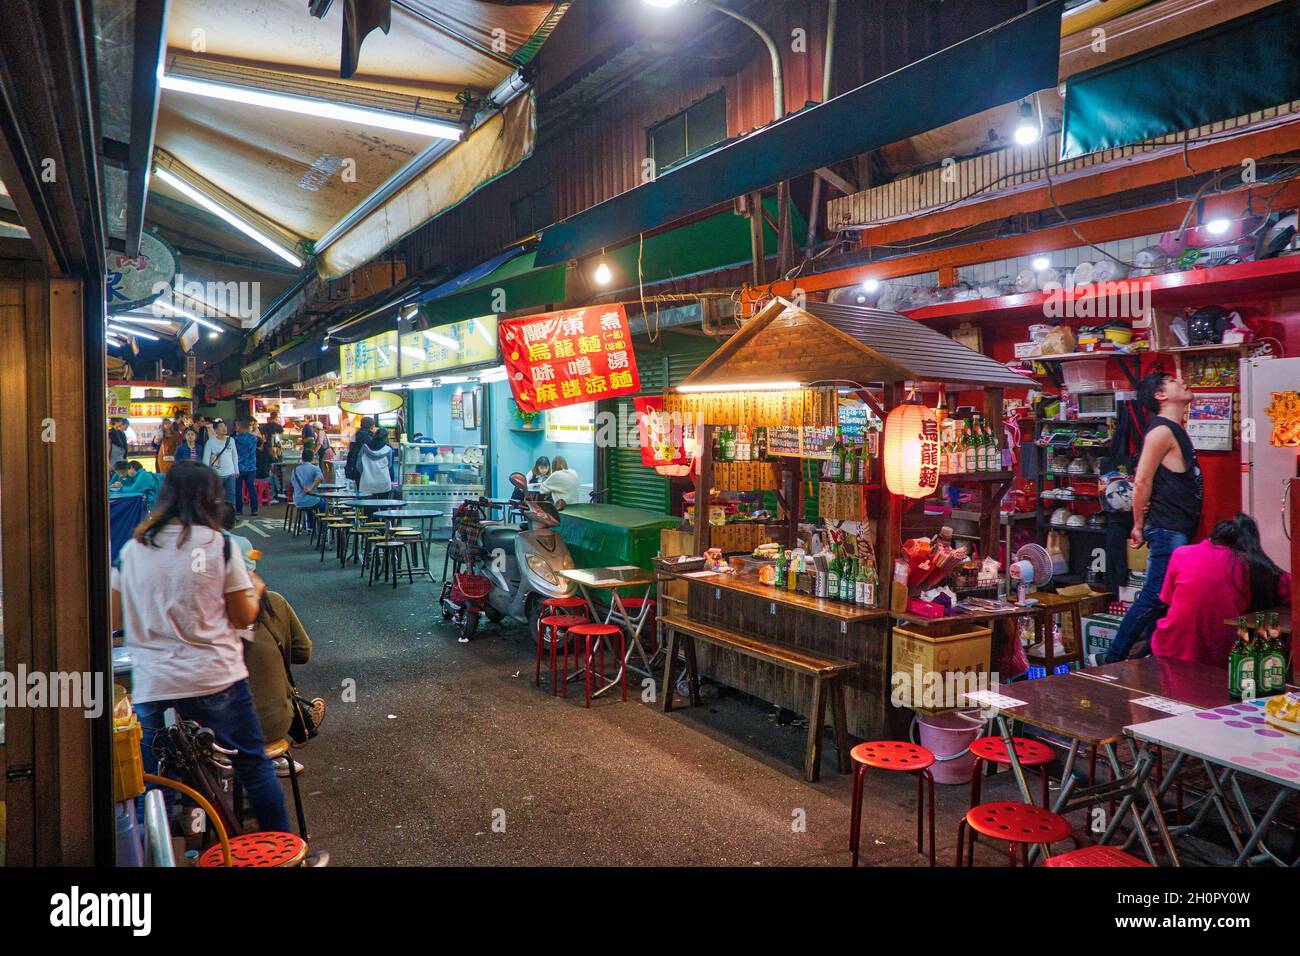 TAIPEI, TAIWAN - DECEMBER 4, 2018: People visit Raohe Night Market in Taipei. Night food markets are a big part of Taiwanese culture. Stock Photo